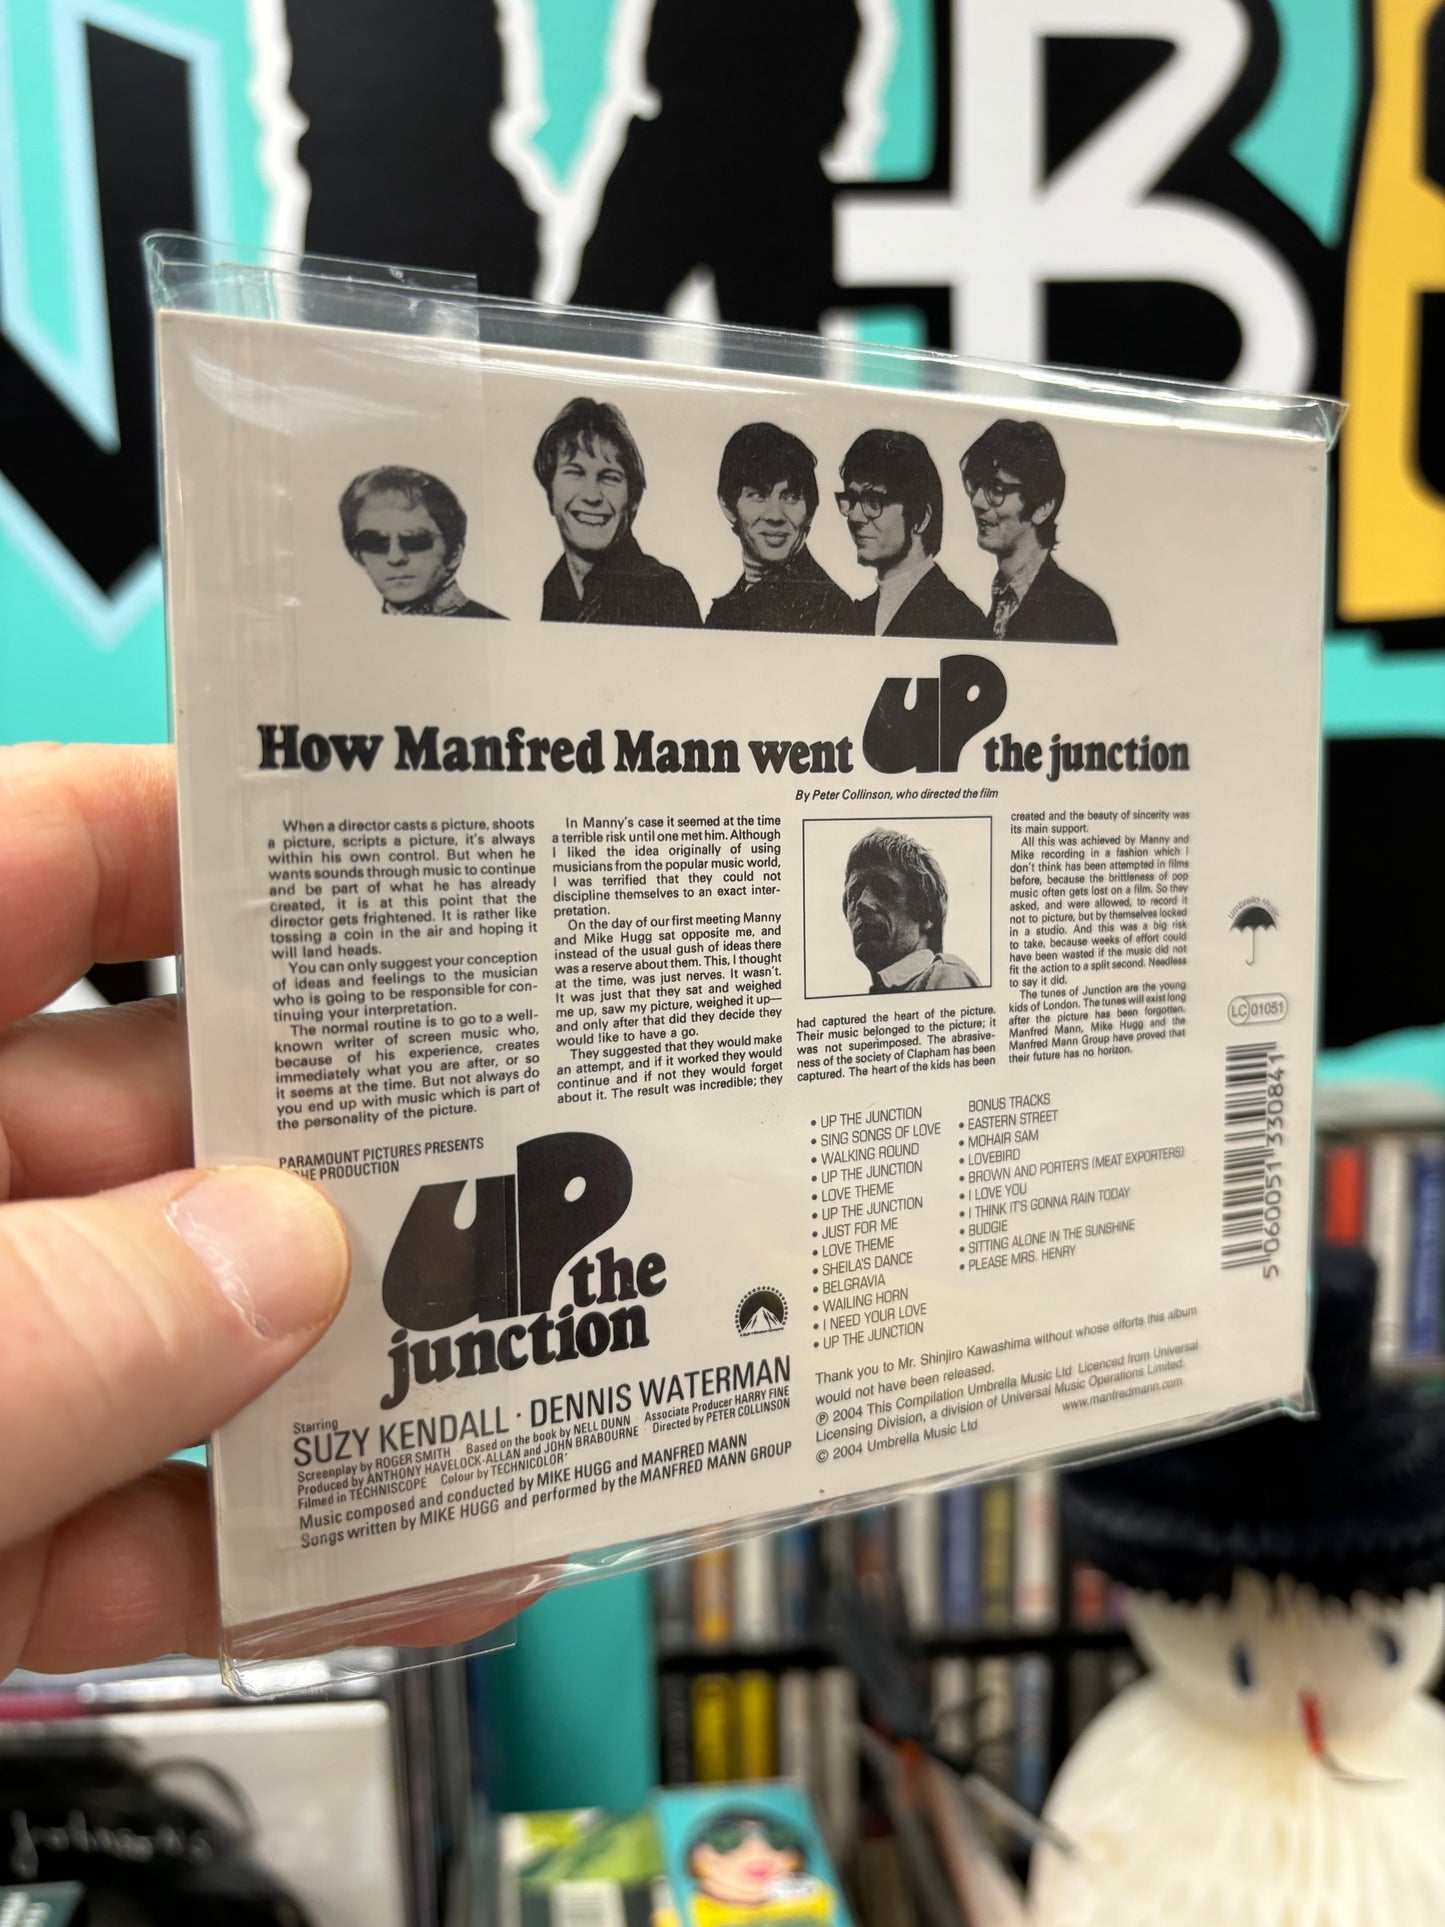 Manfred Mann: Go Up The Junction (Original Soundtrack Recording), CD, reissue, UK 2004